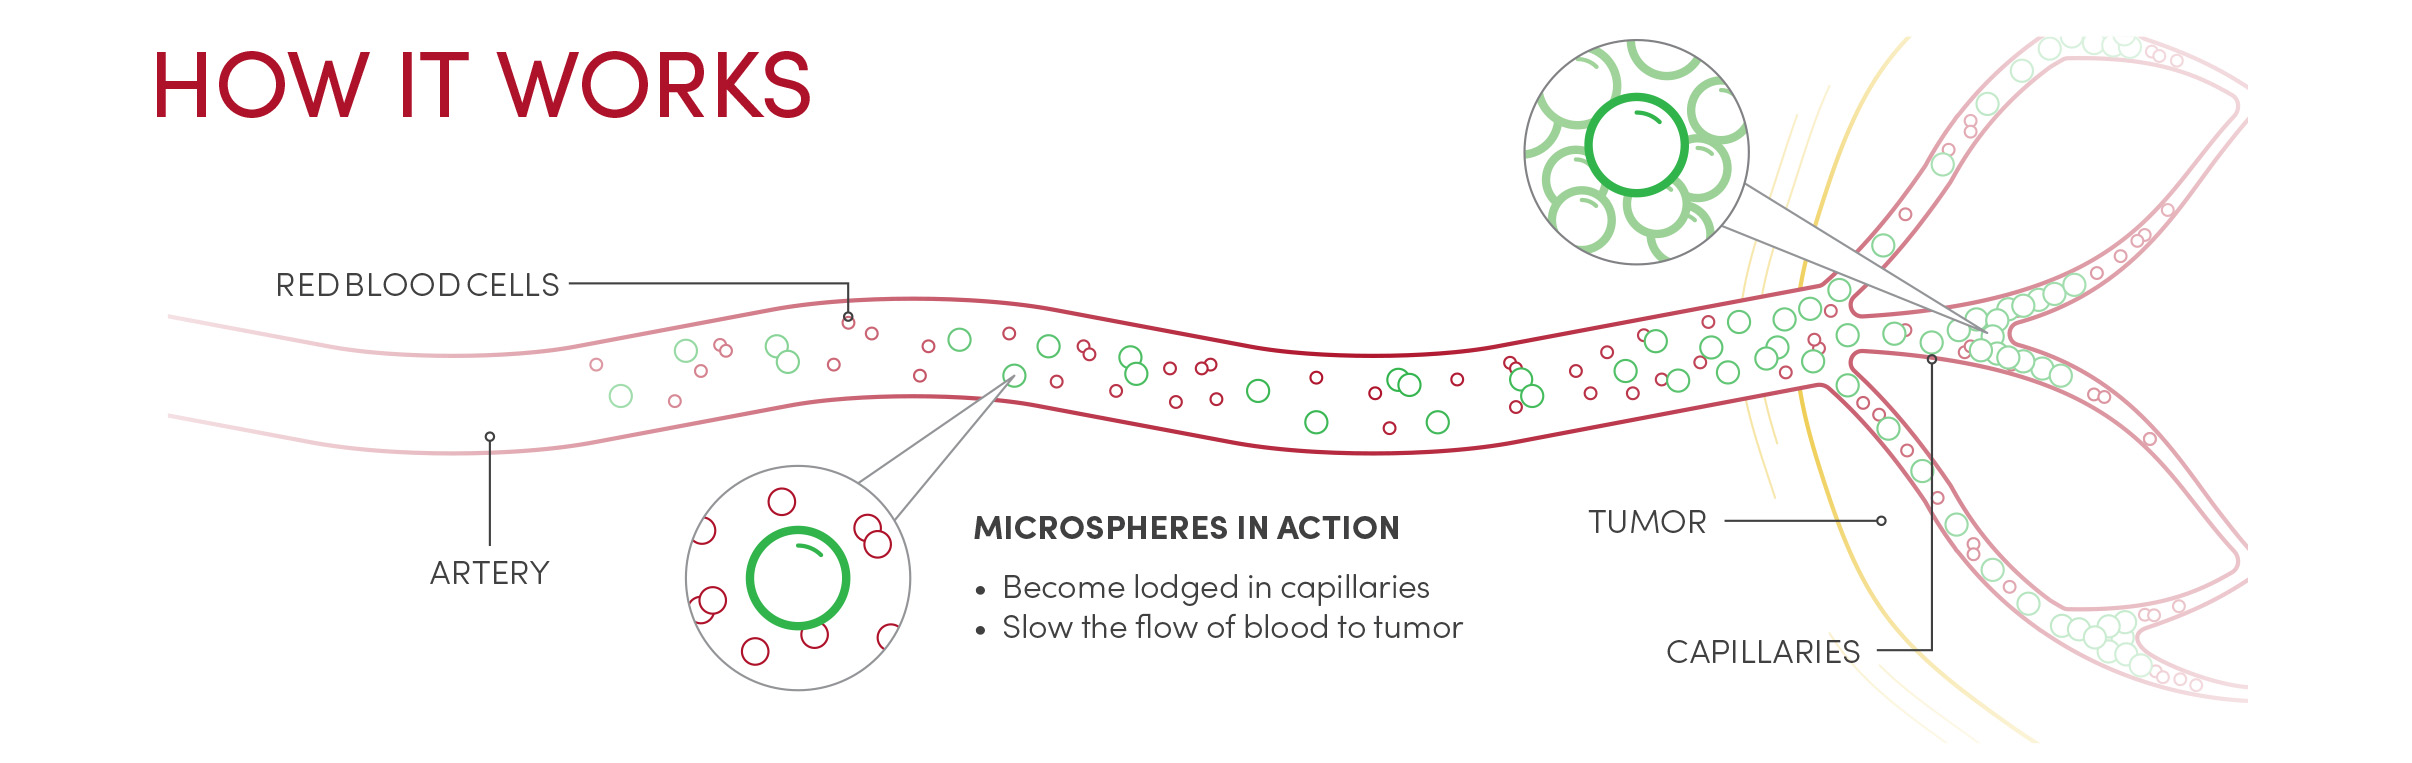 microspheres-in-action